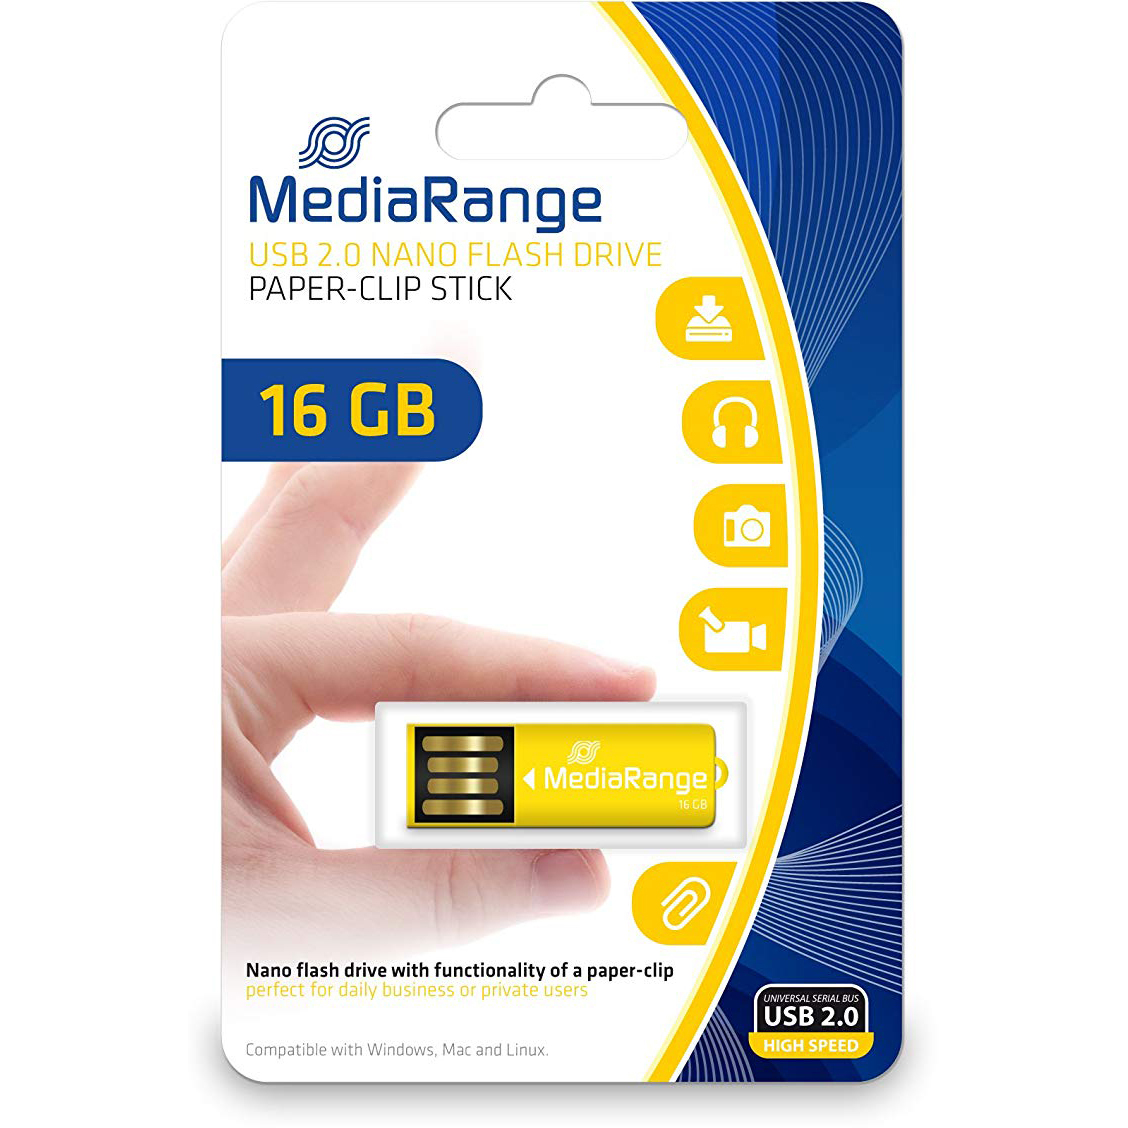 Original MediaRange Nano 16GB Yellow USB 2.0 Paper-Click Stick Flash Drive (MR976)